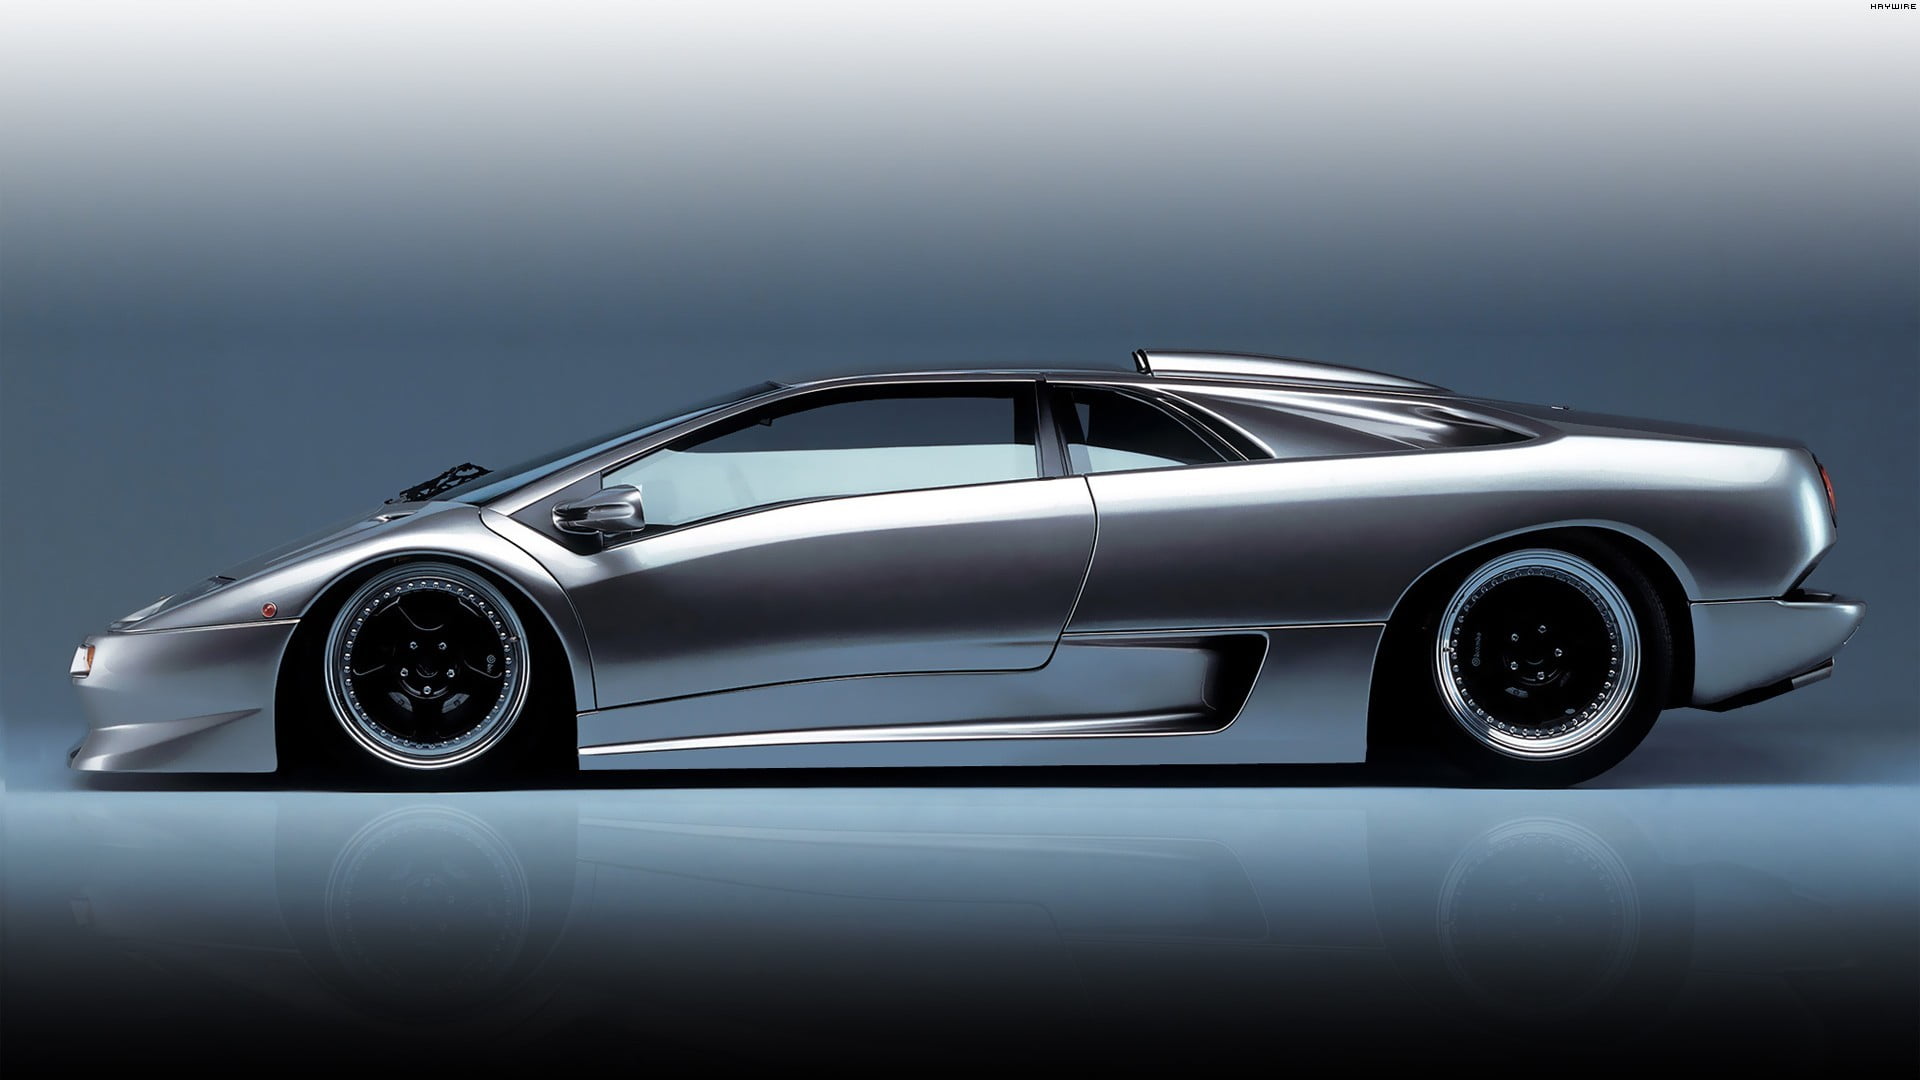 silver coupe, Lamborghini Diablo, car, mode of transportation